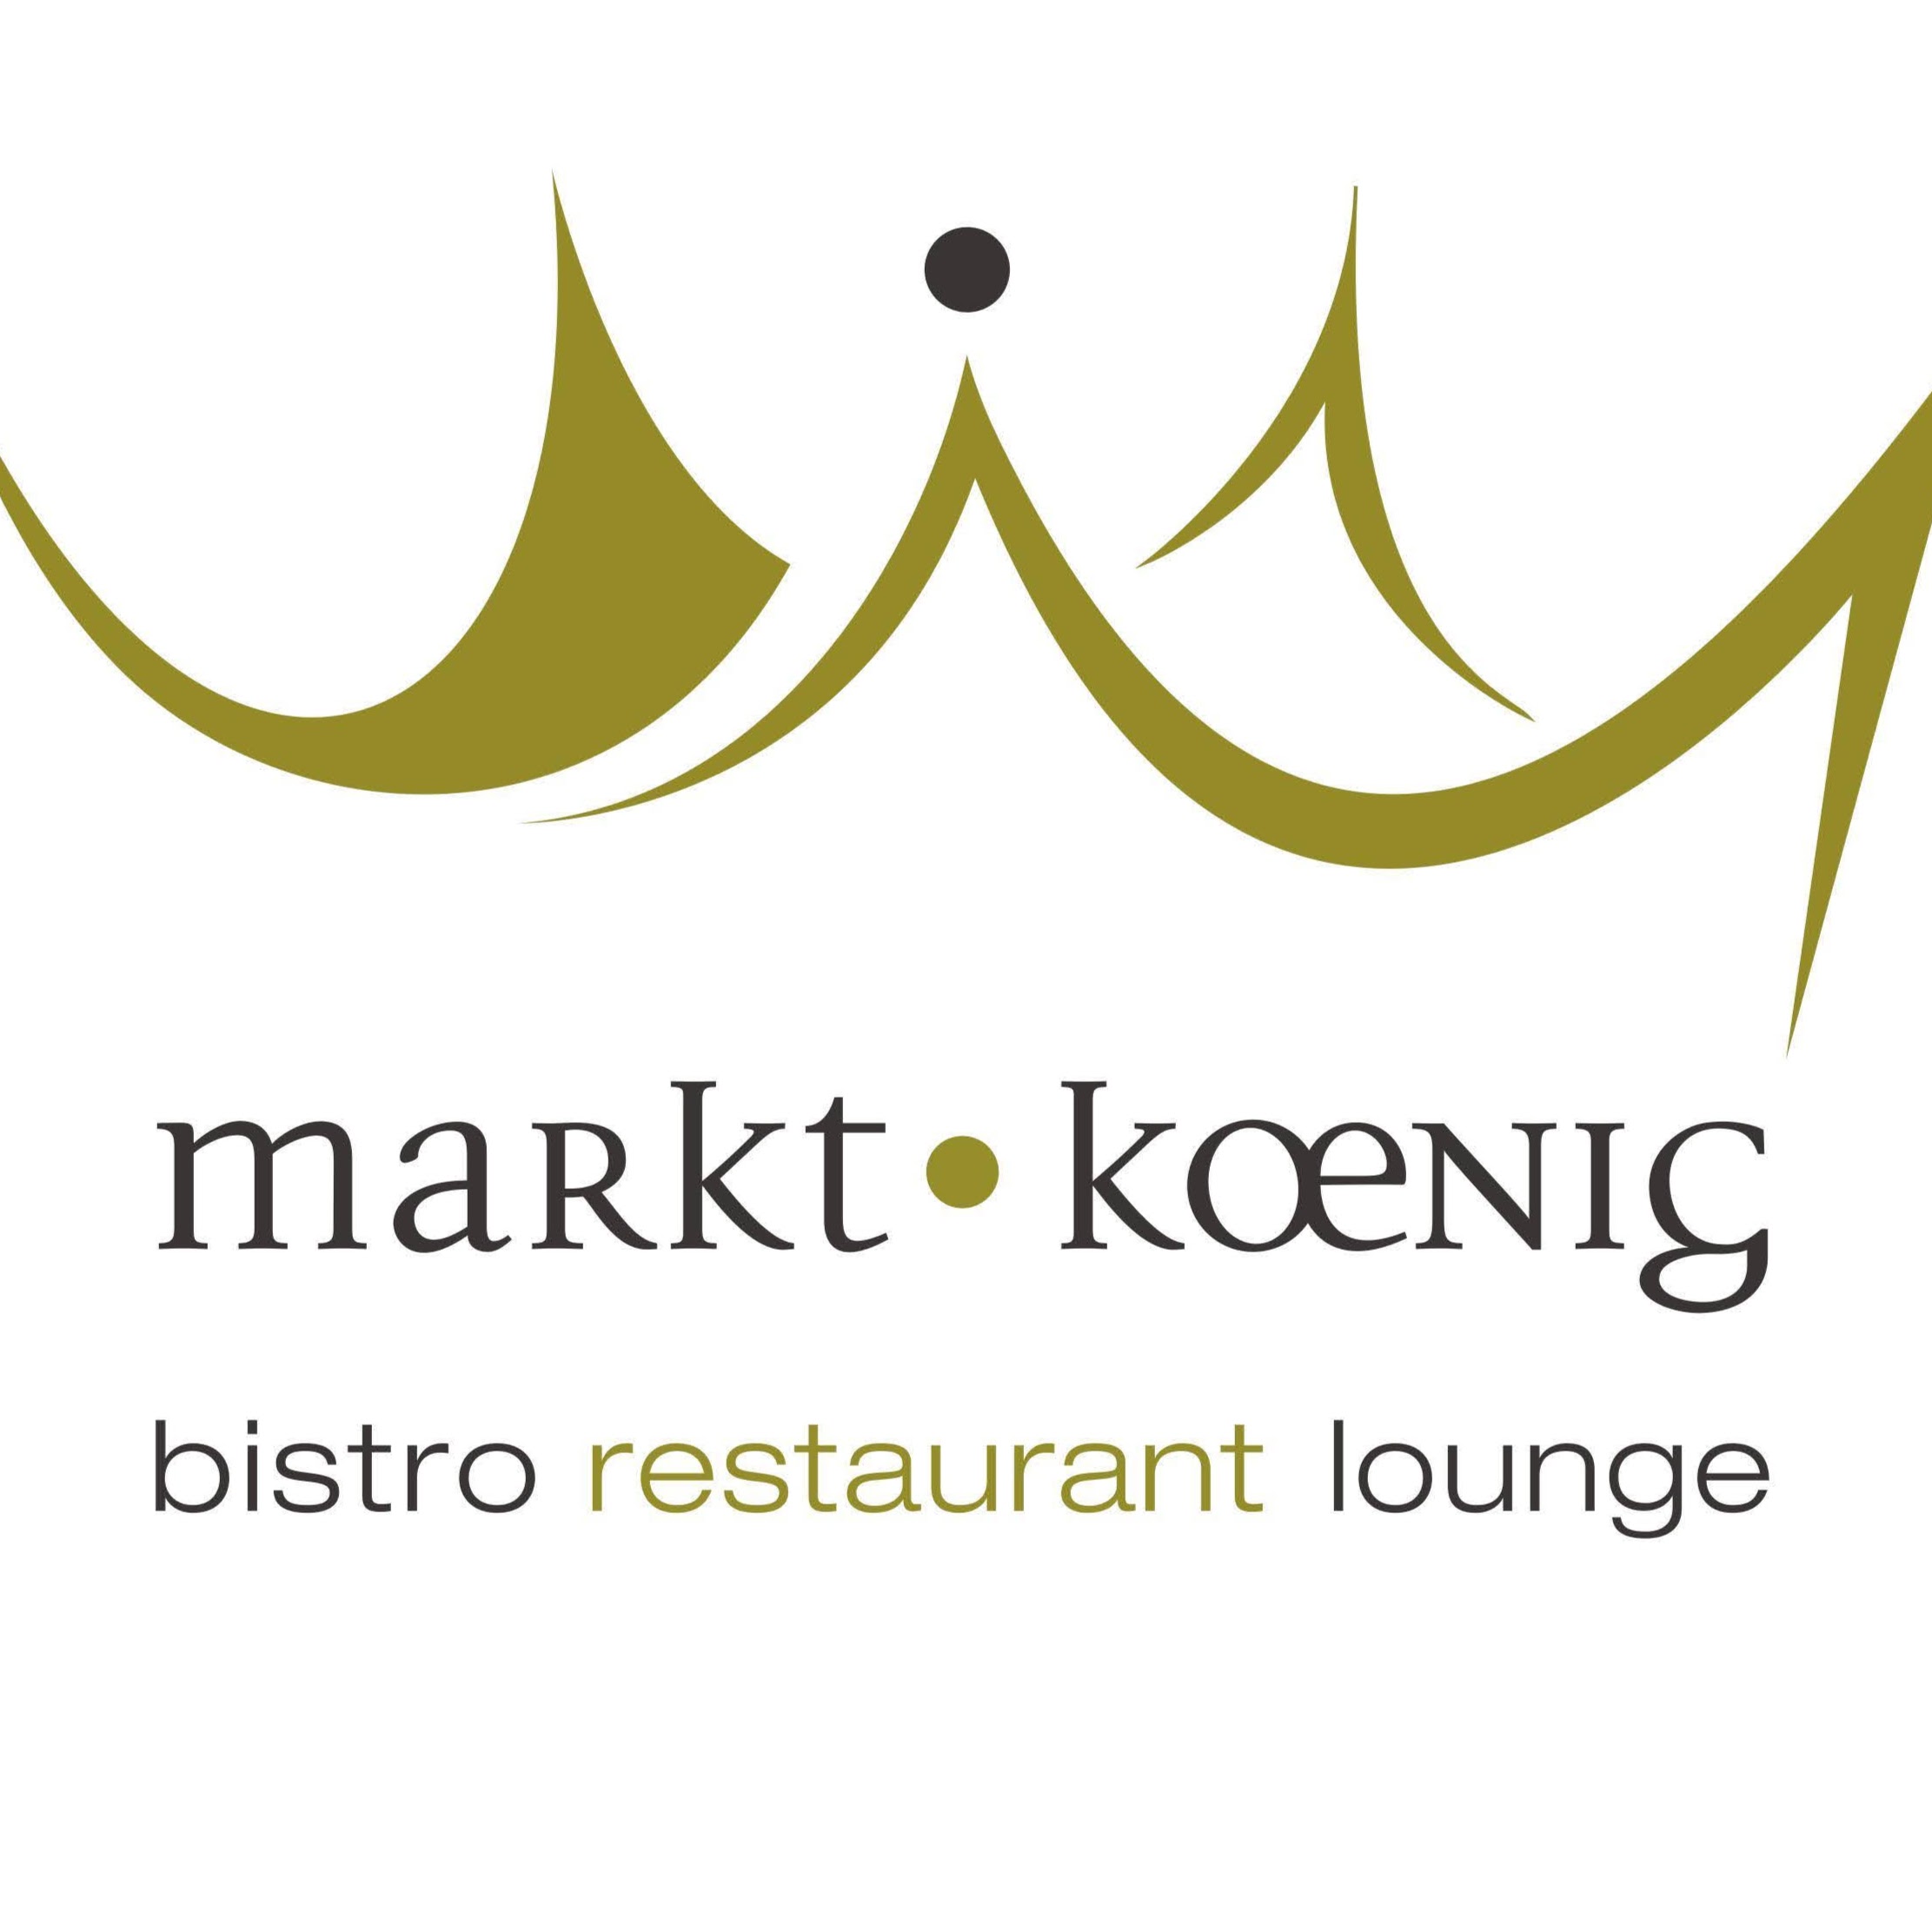 Markt-Koenig Logo